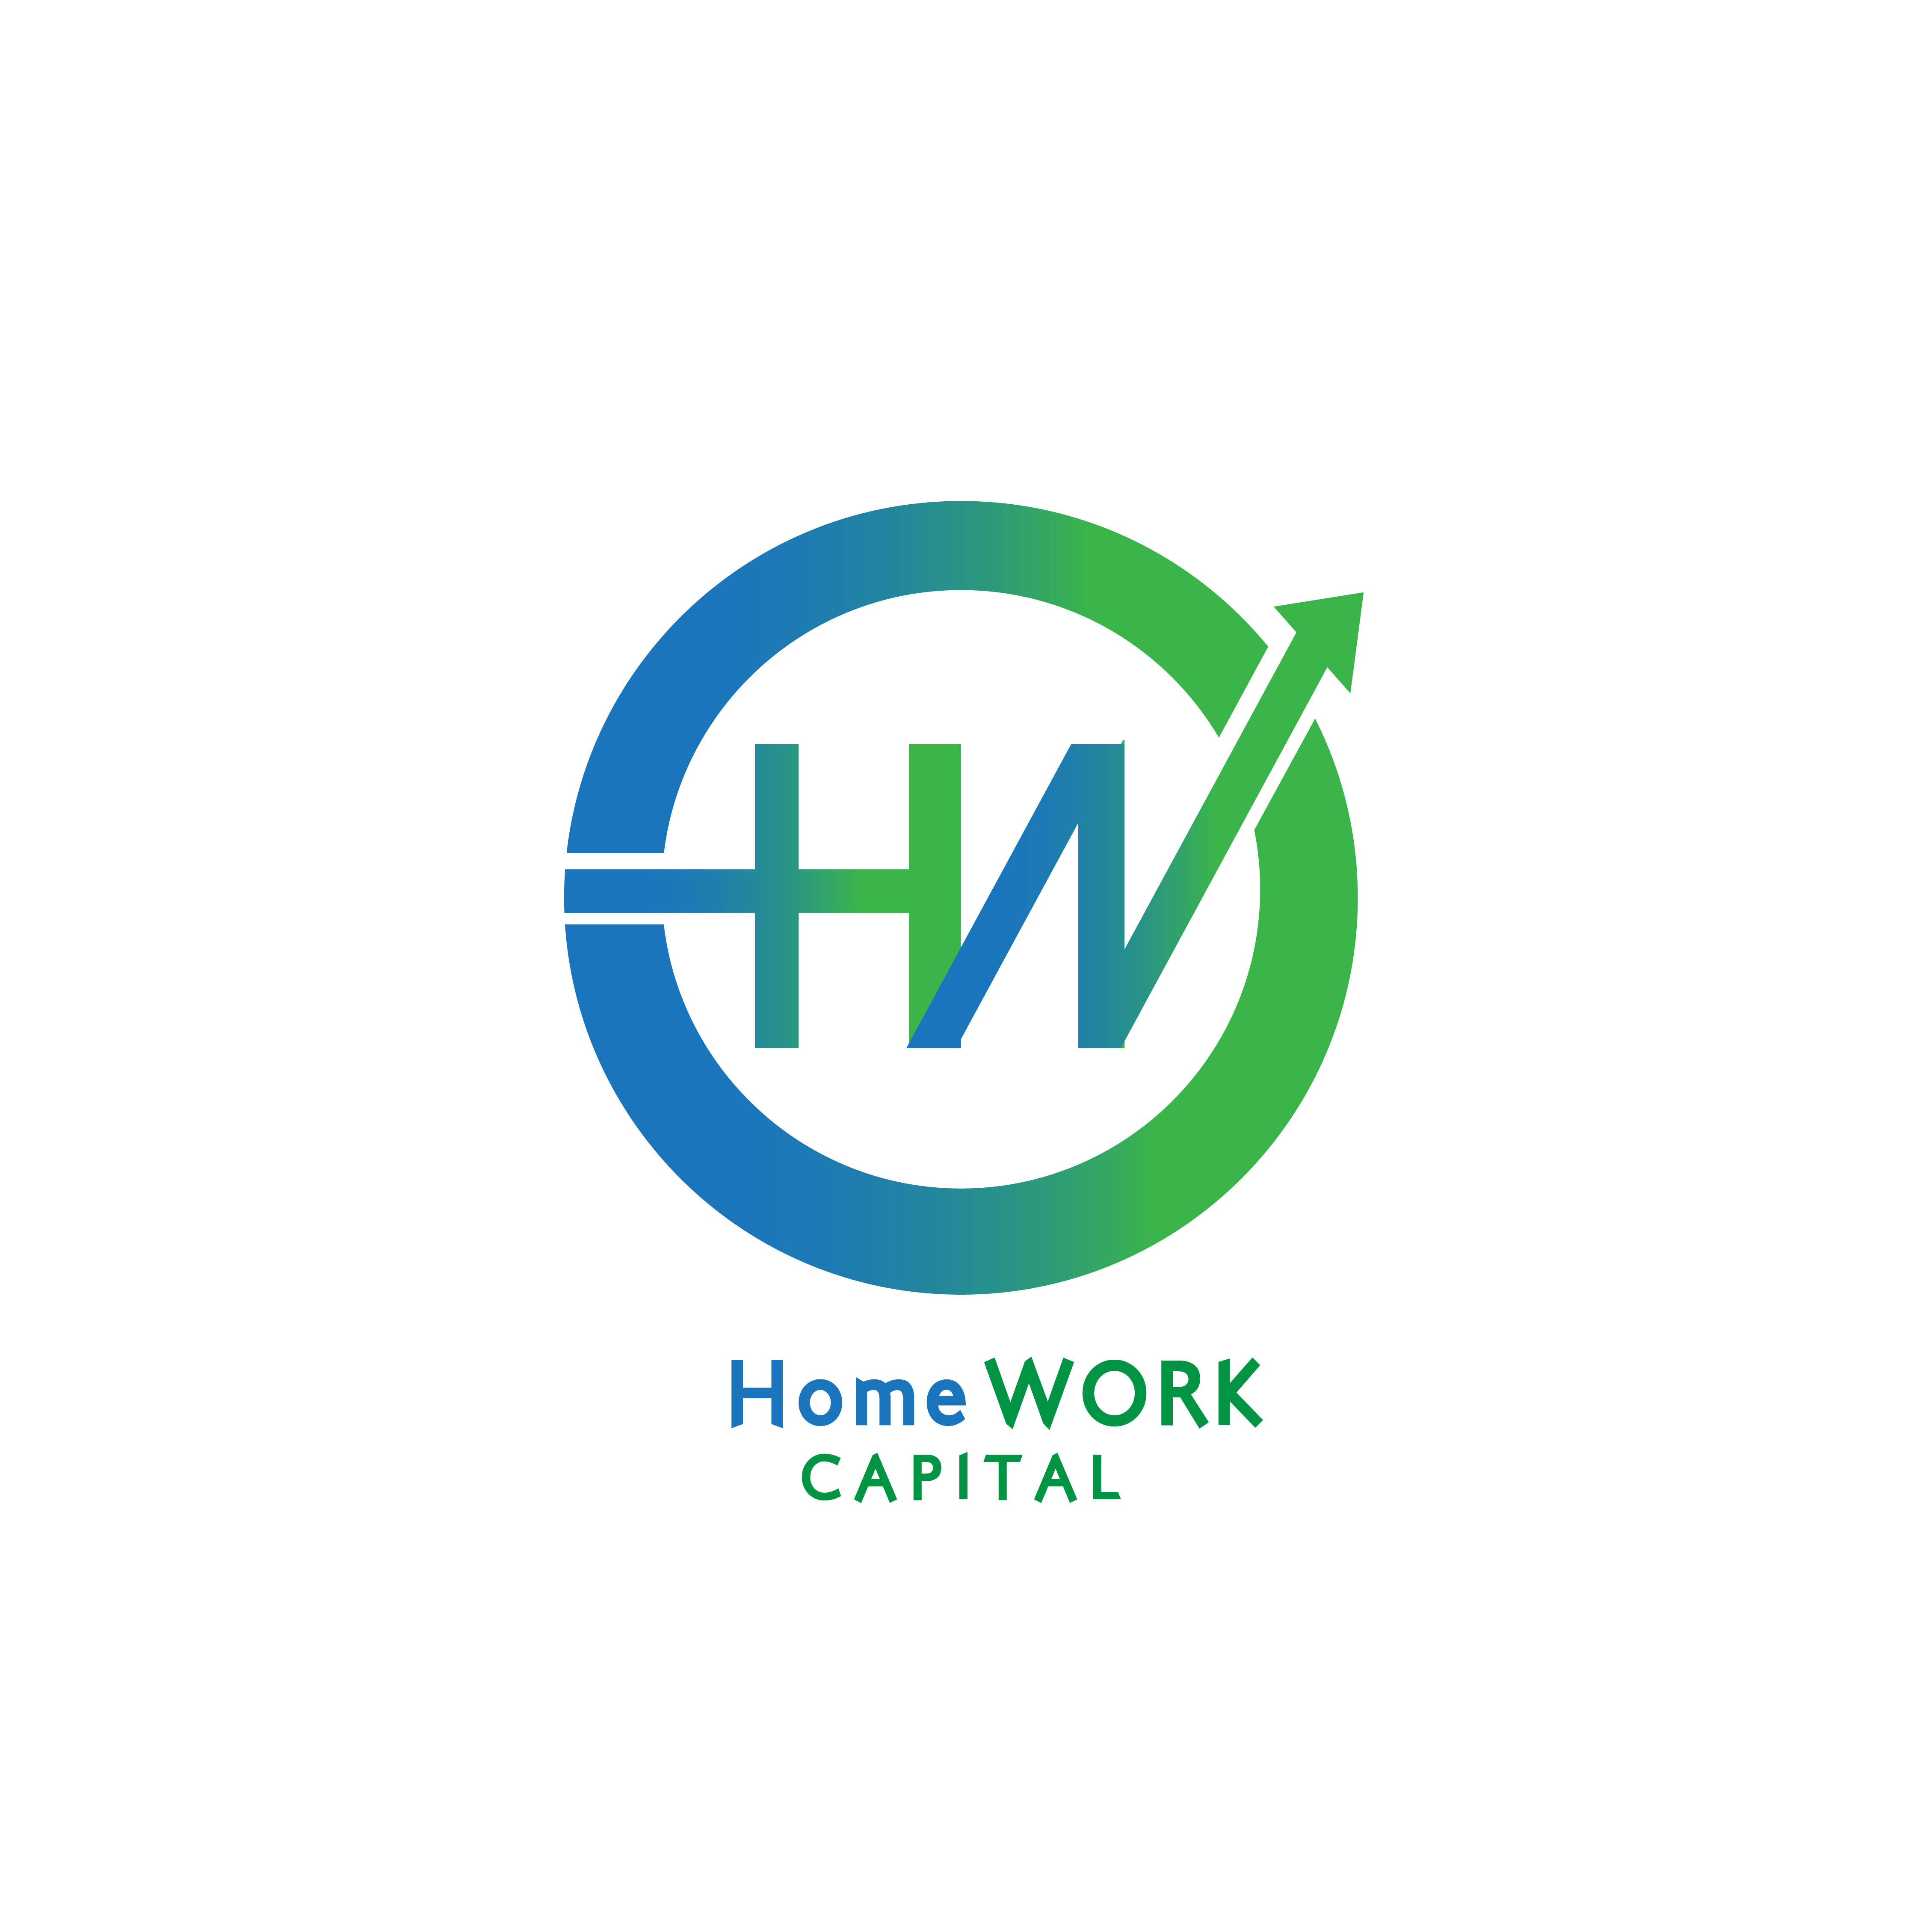 Homework Capital